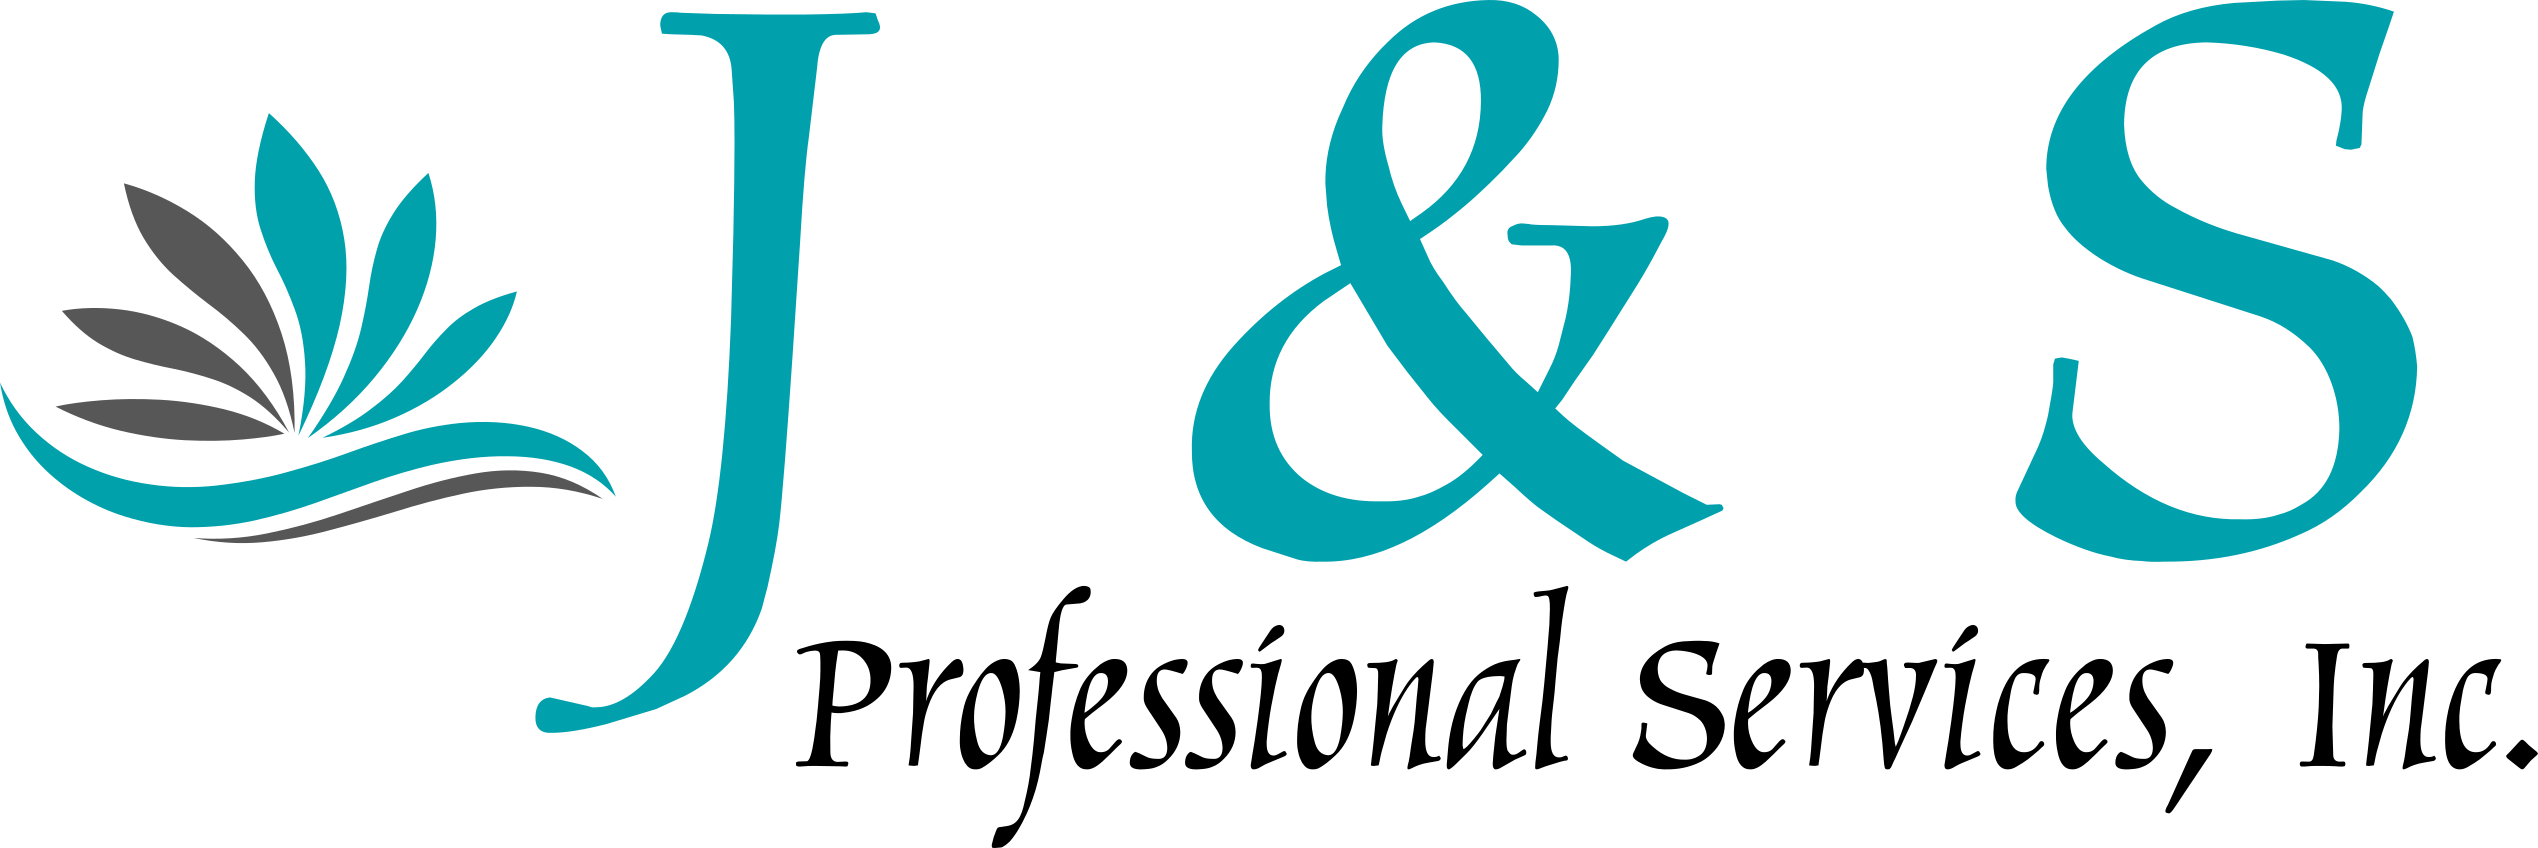 Letter s and j logo design minimal monogram Vector Image